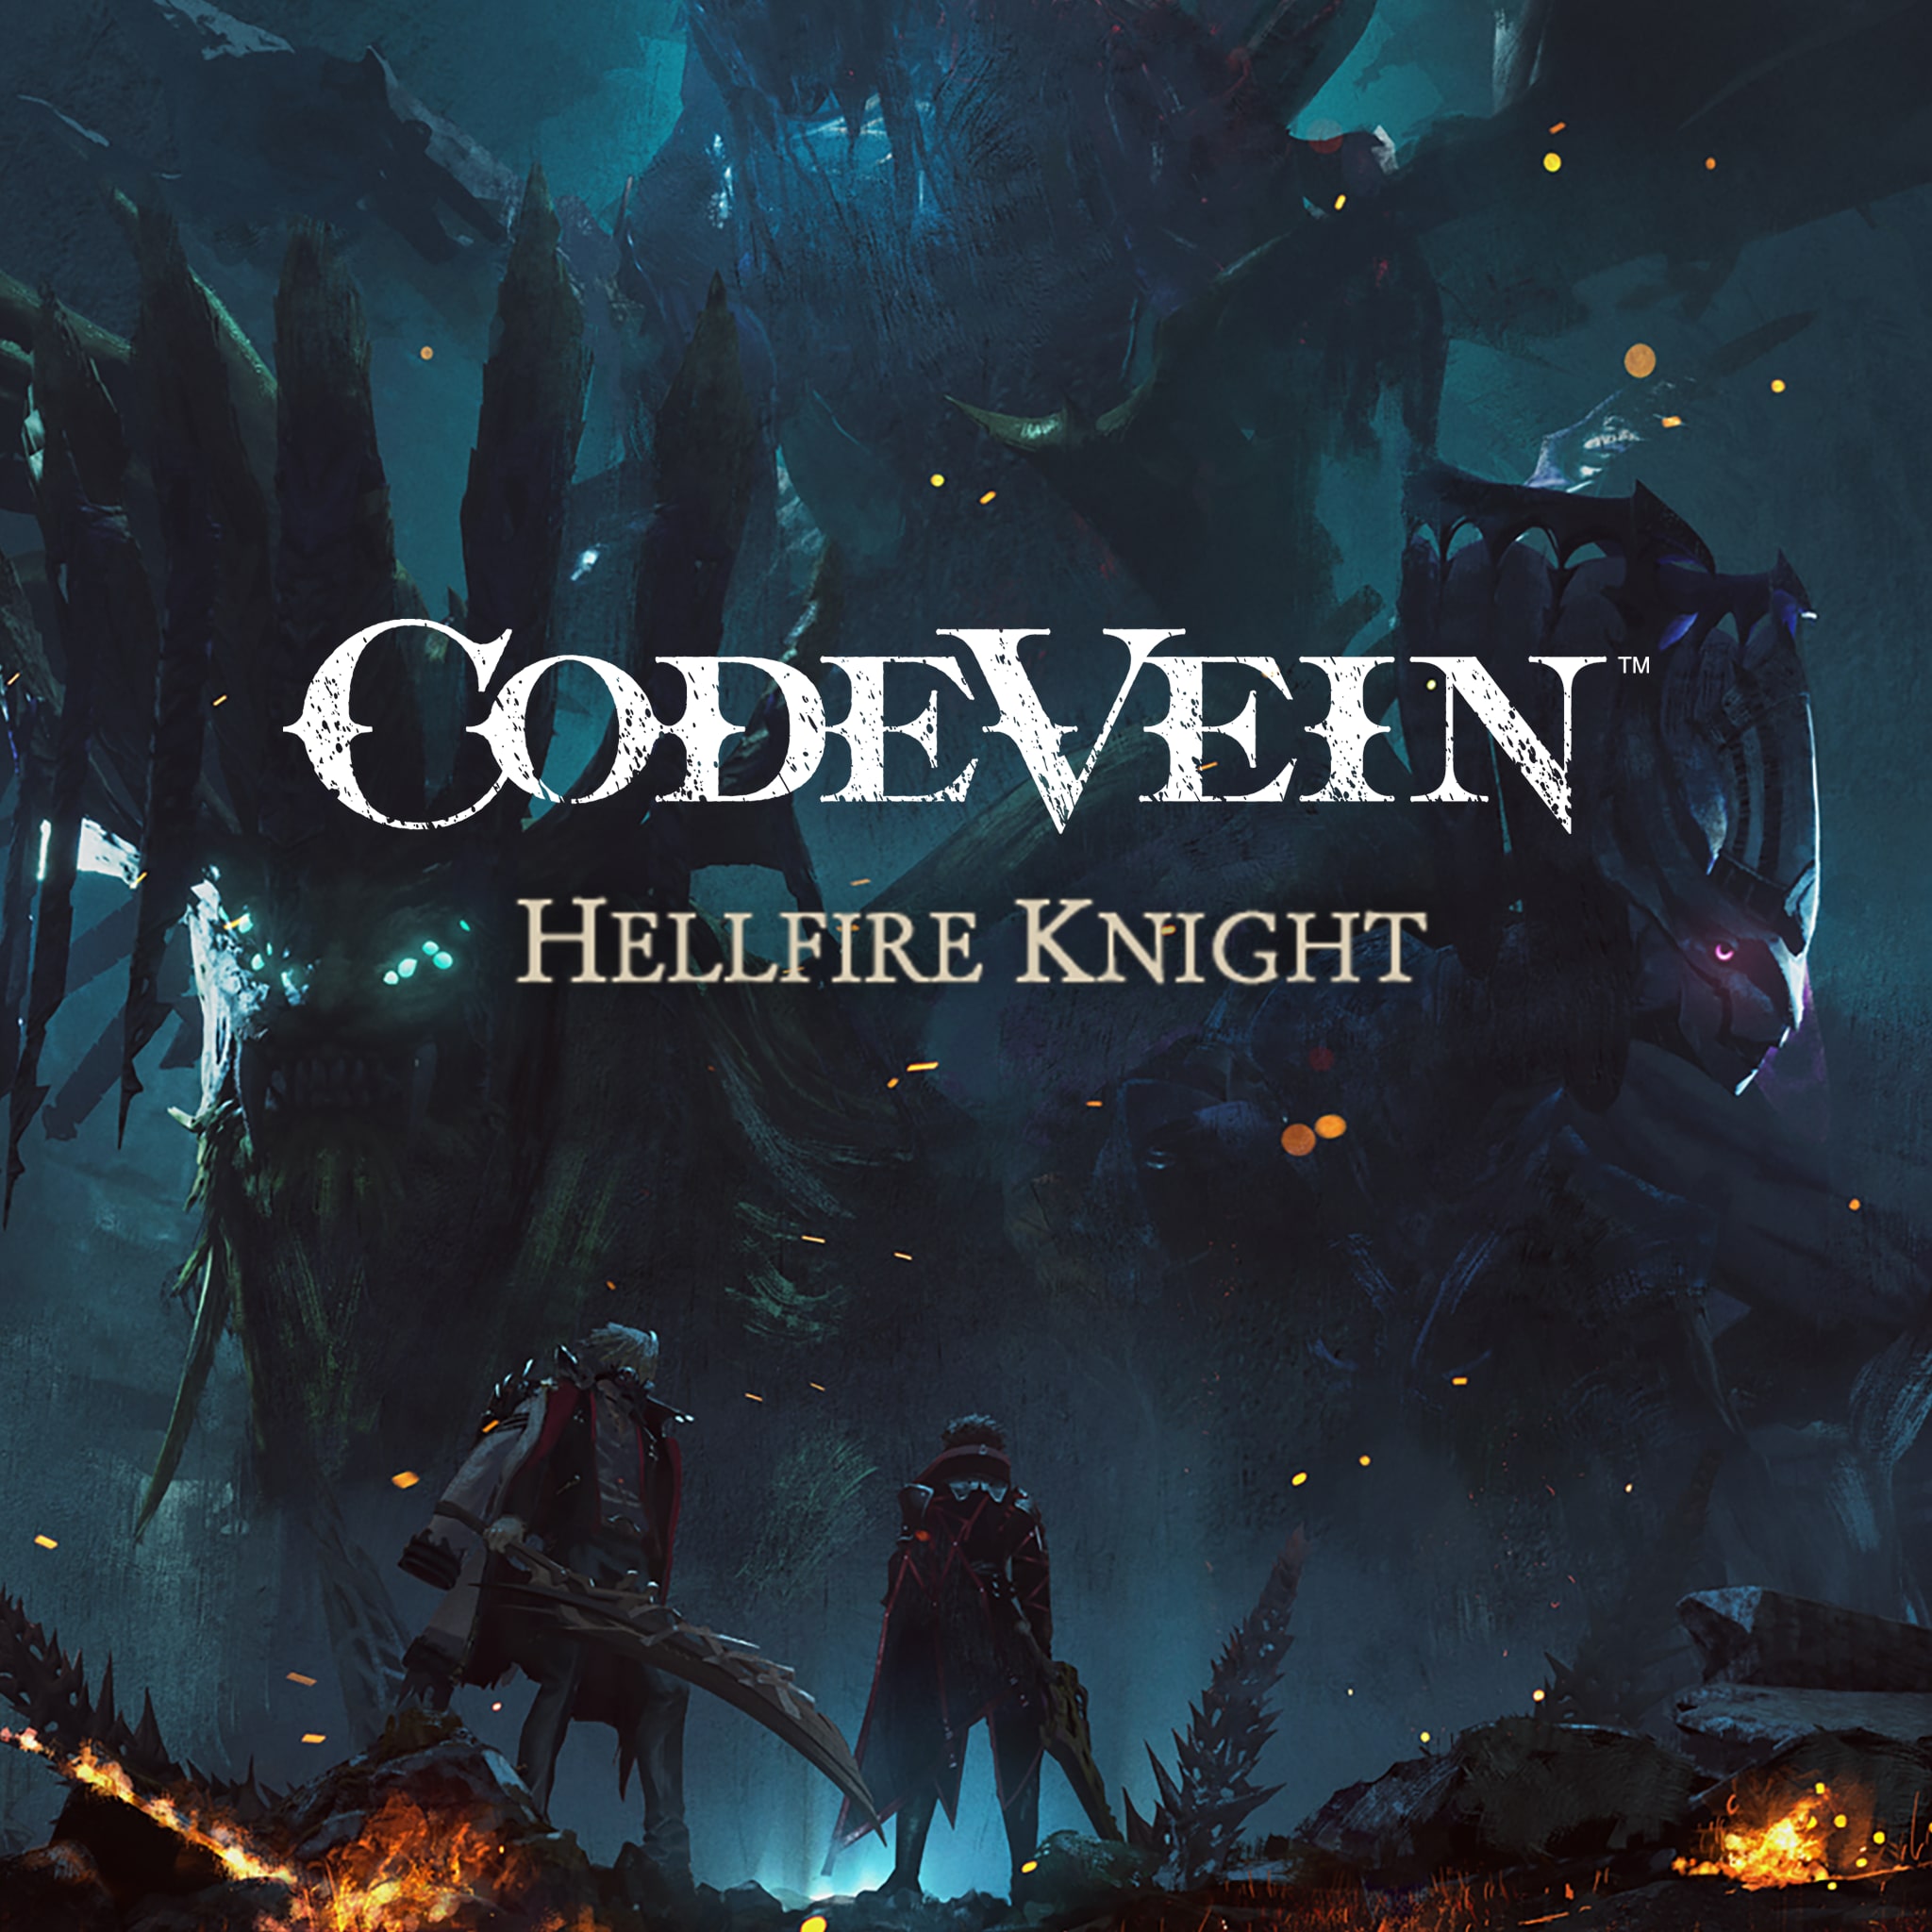 CODE VEIN: Hellfire Knight